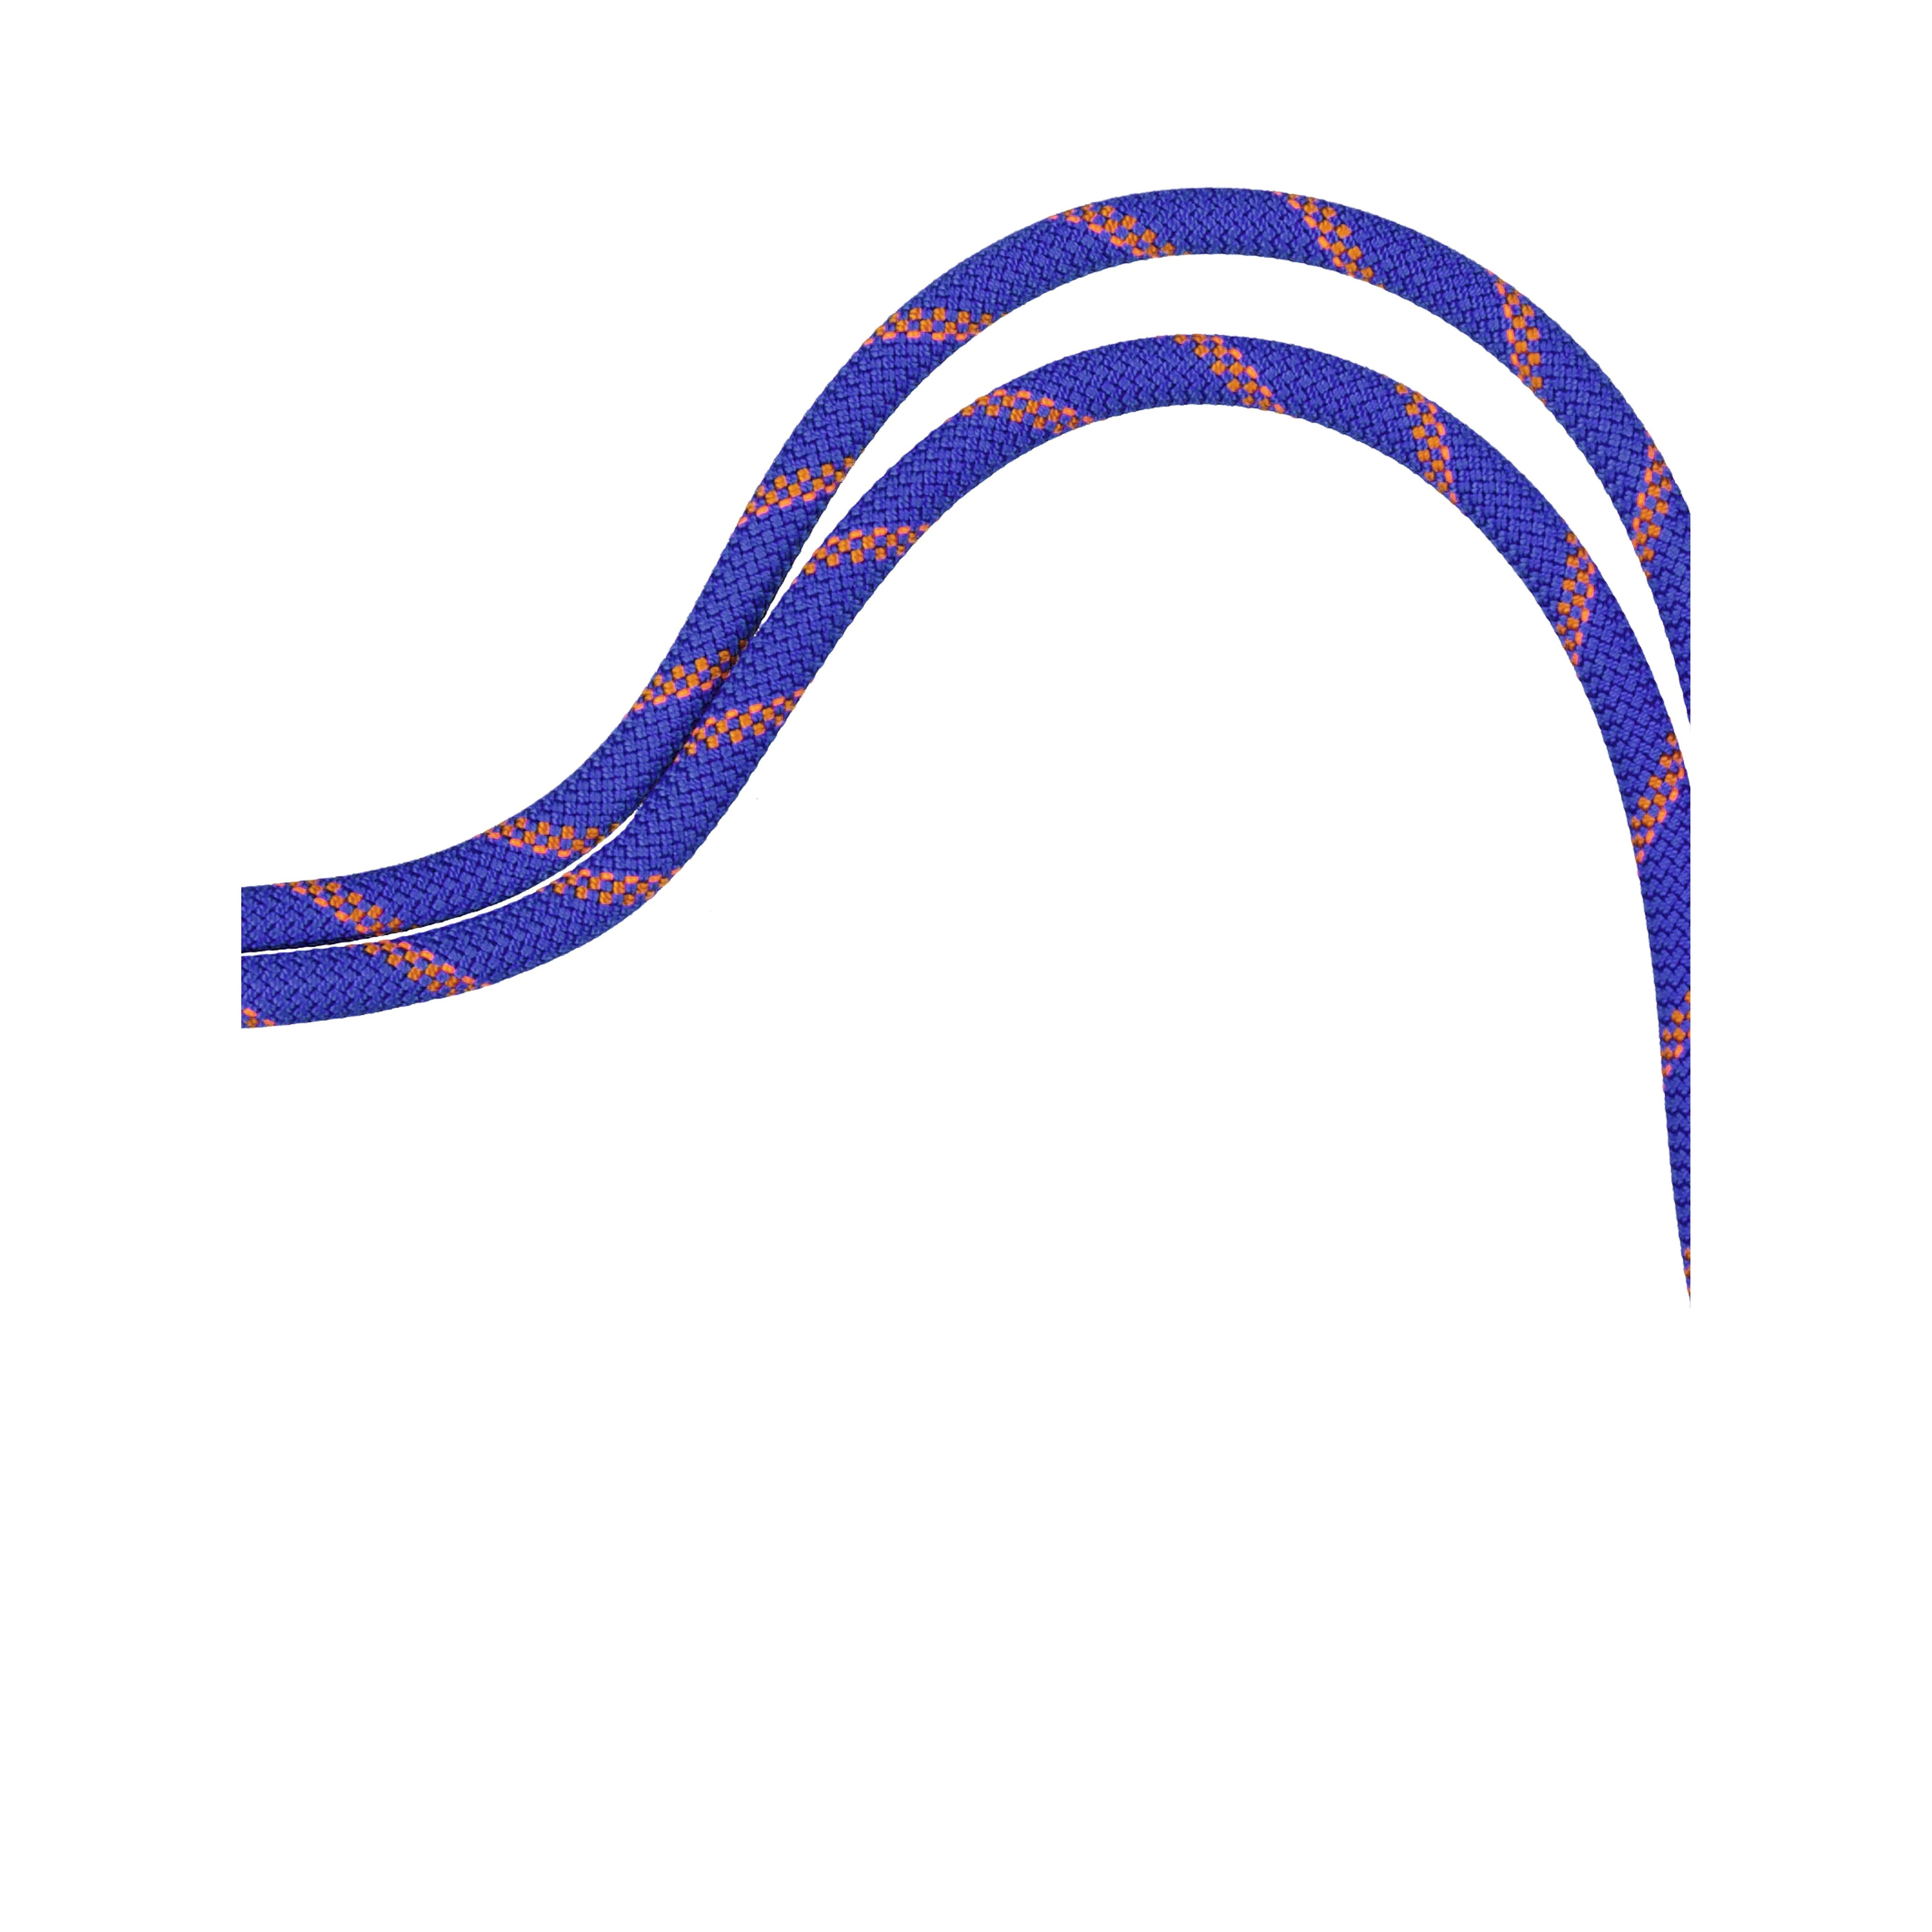 9.0 Alpine Sender Dry Rope product image